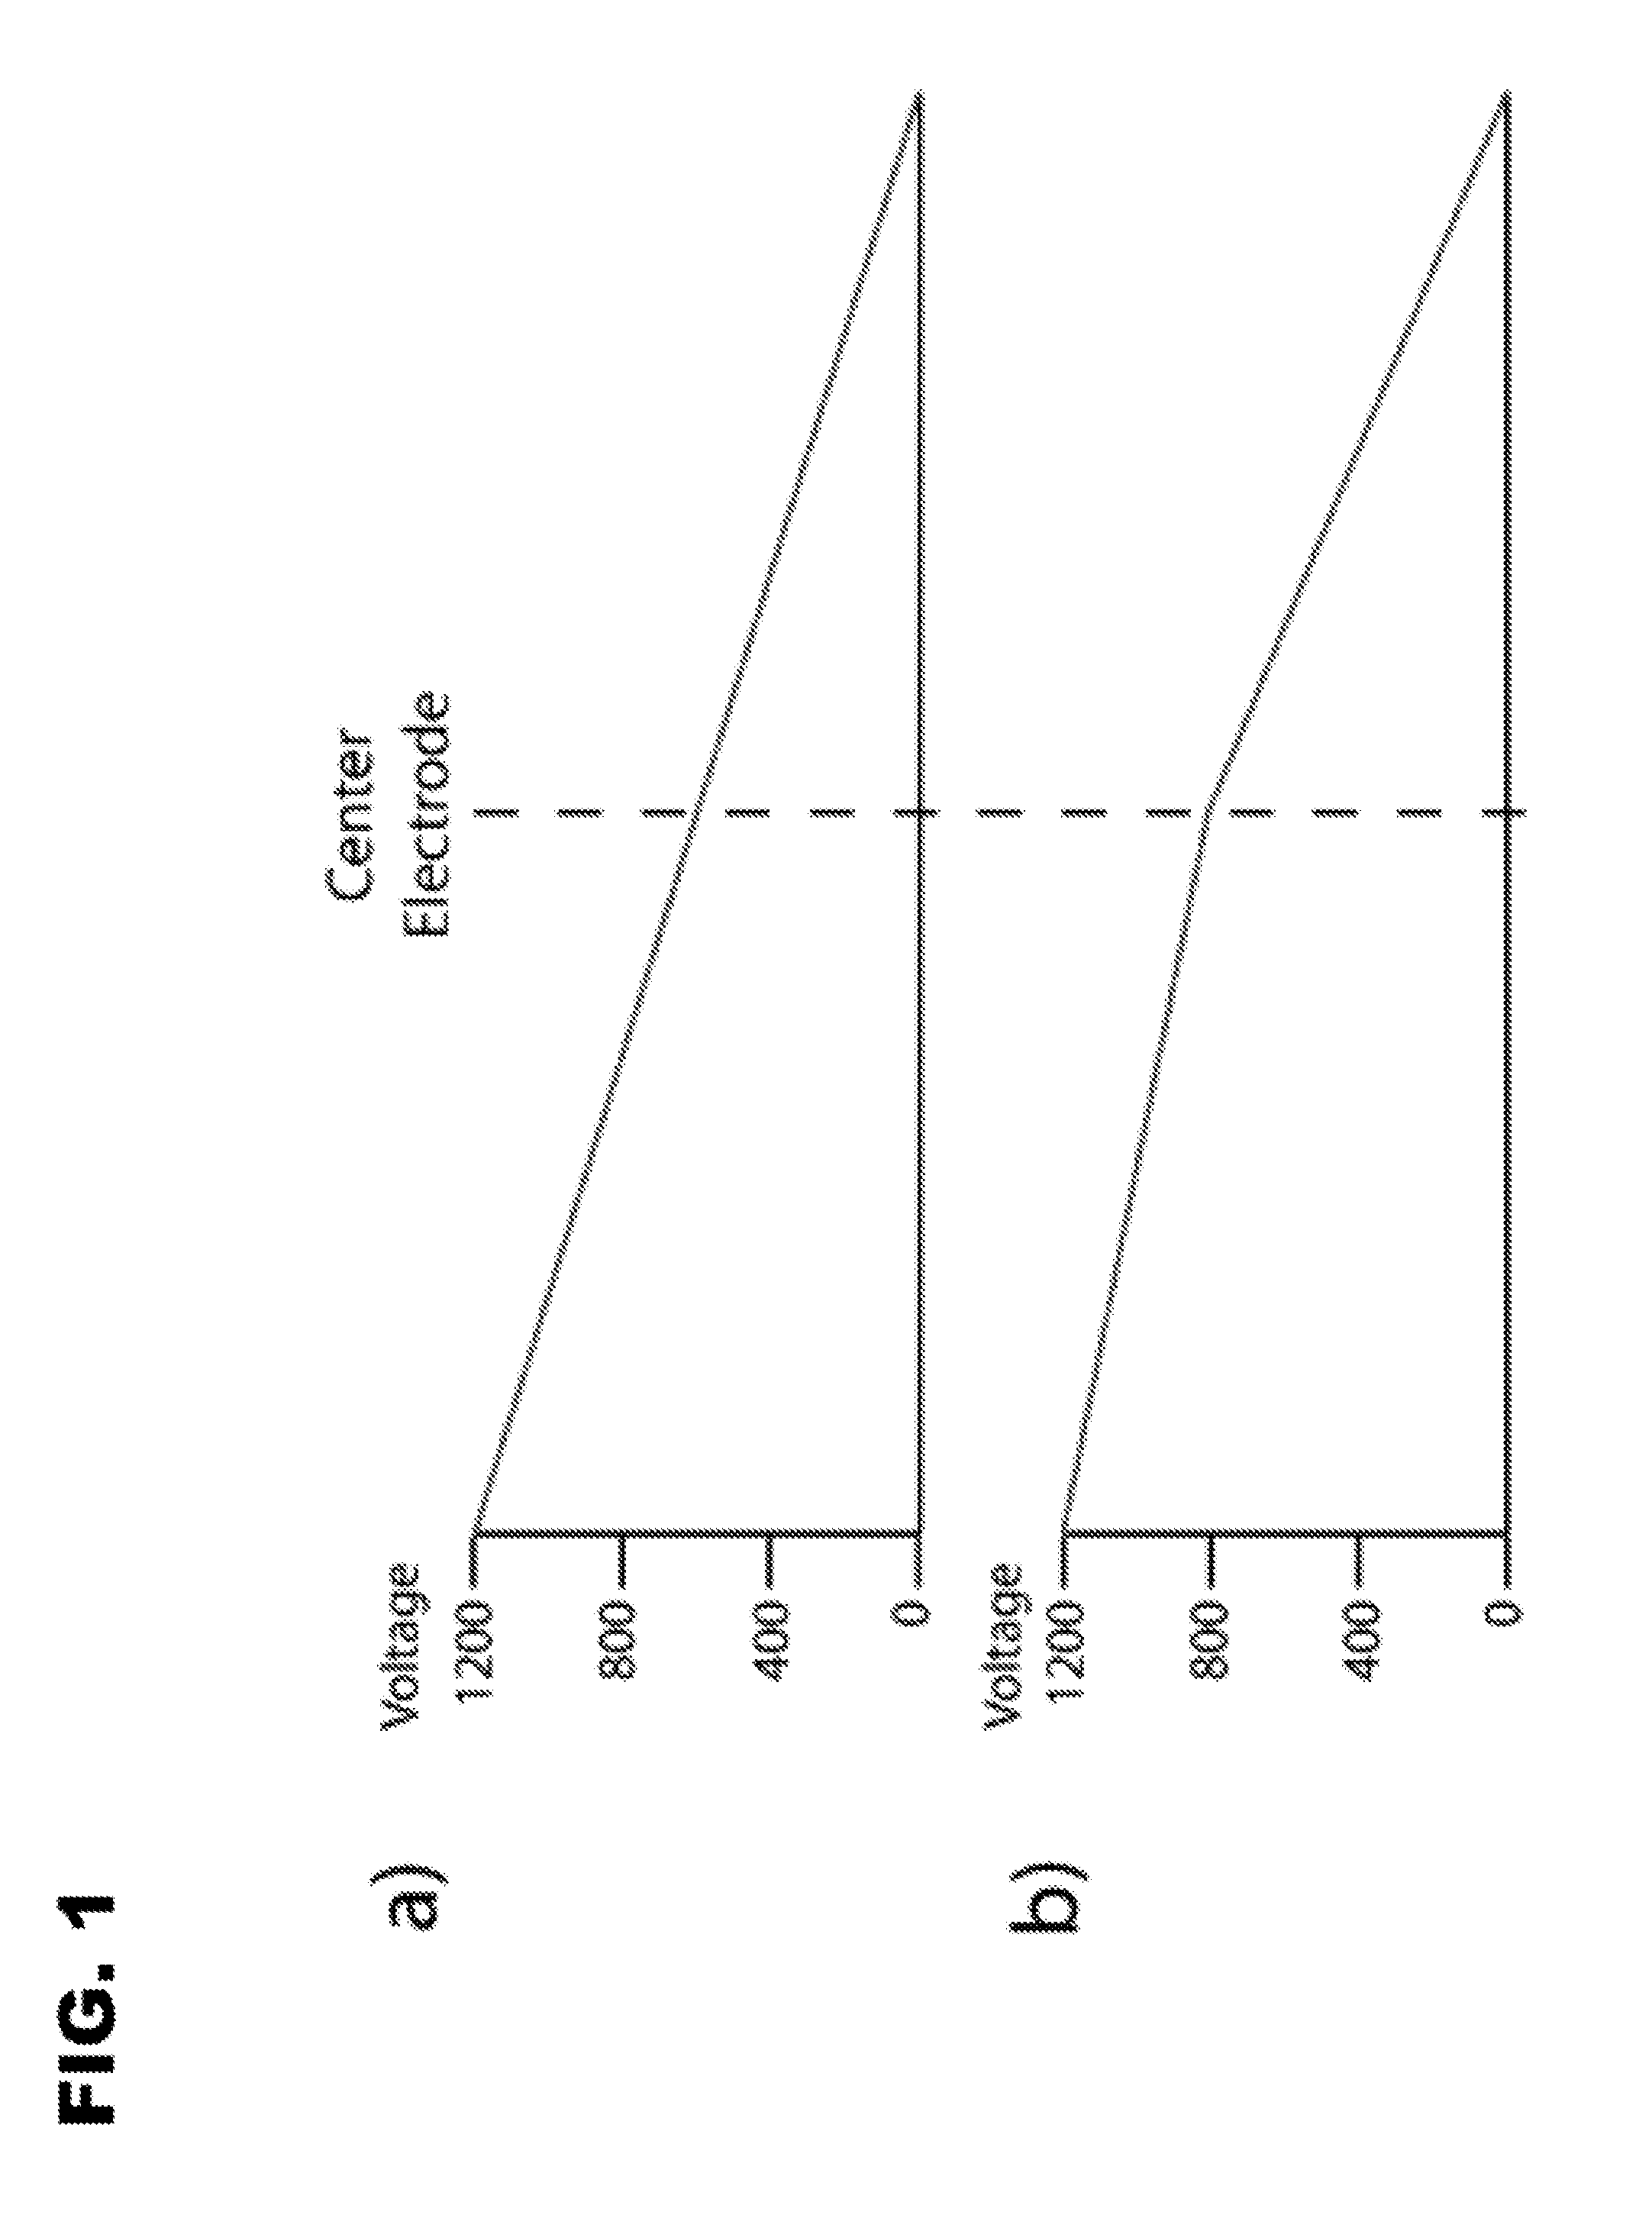 Method of detecting analyte-molecule interactions